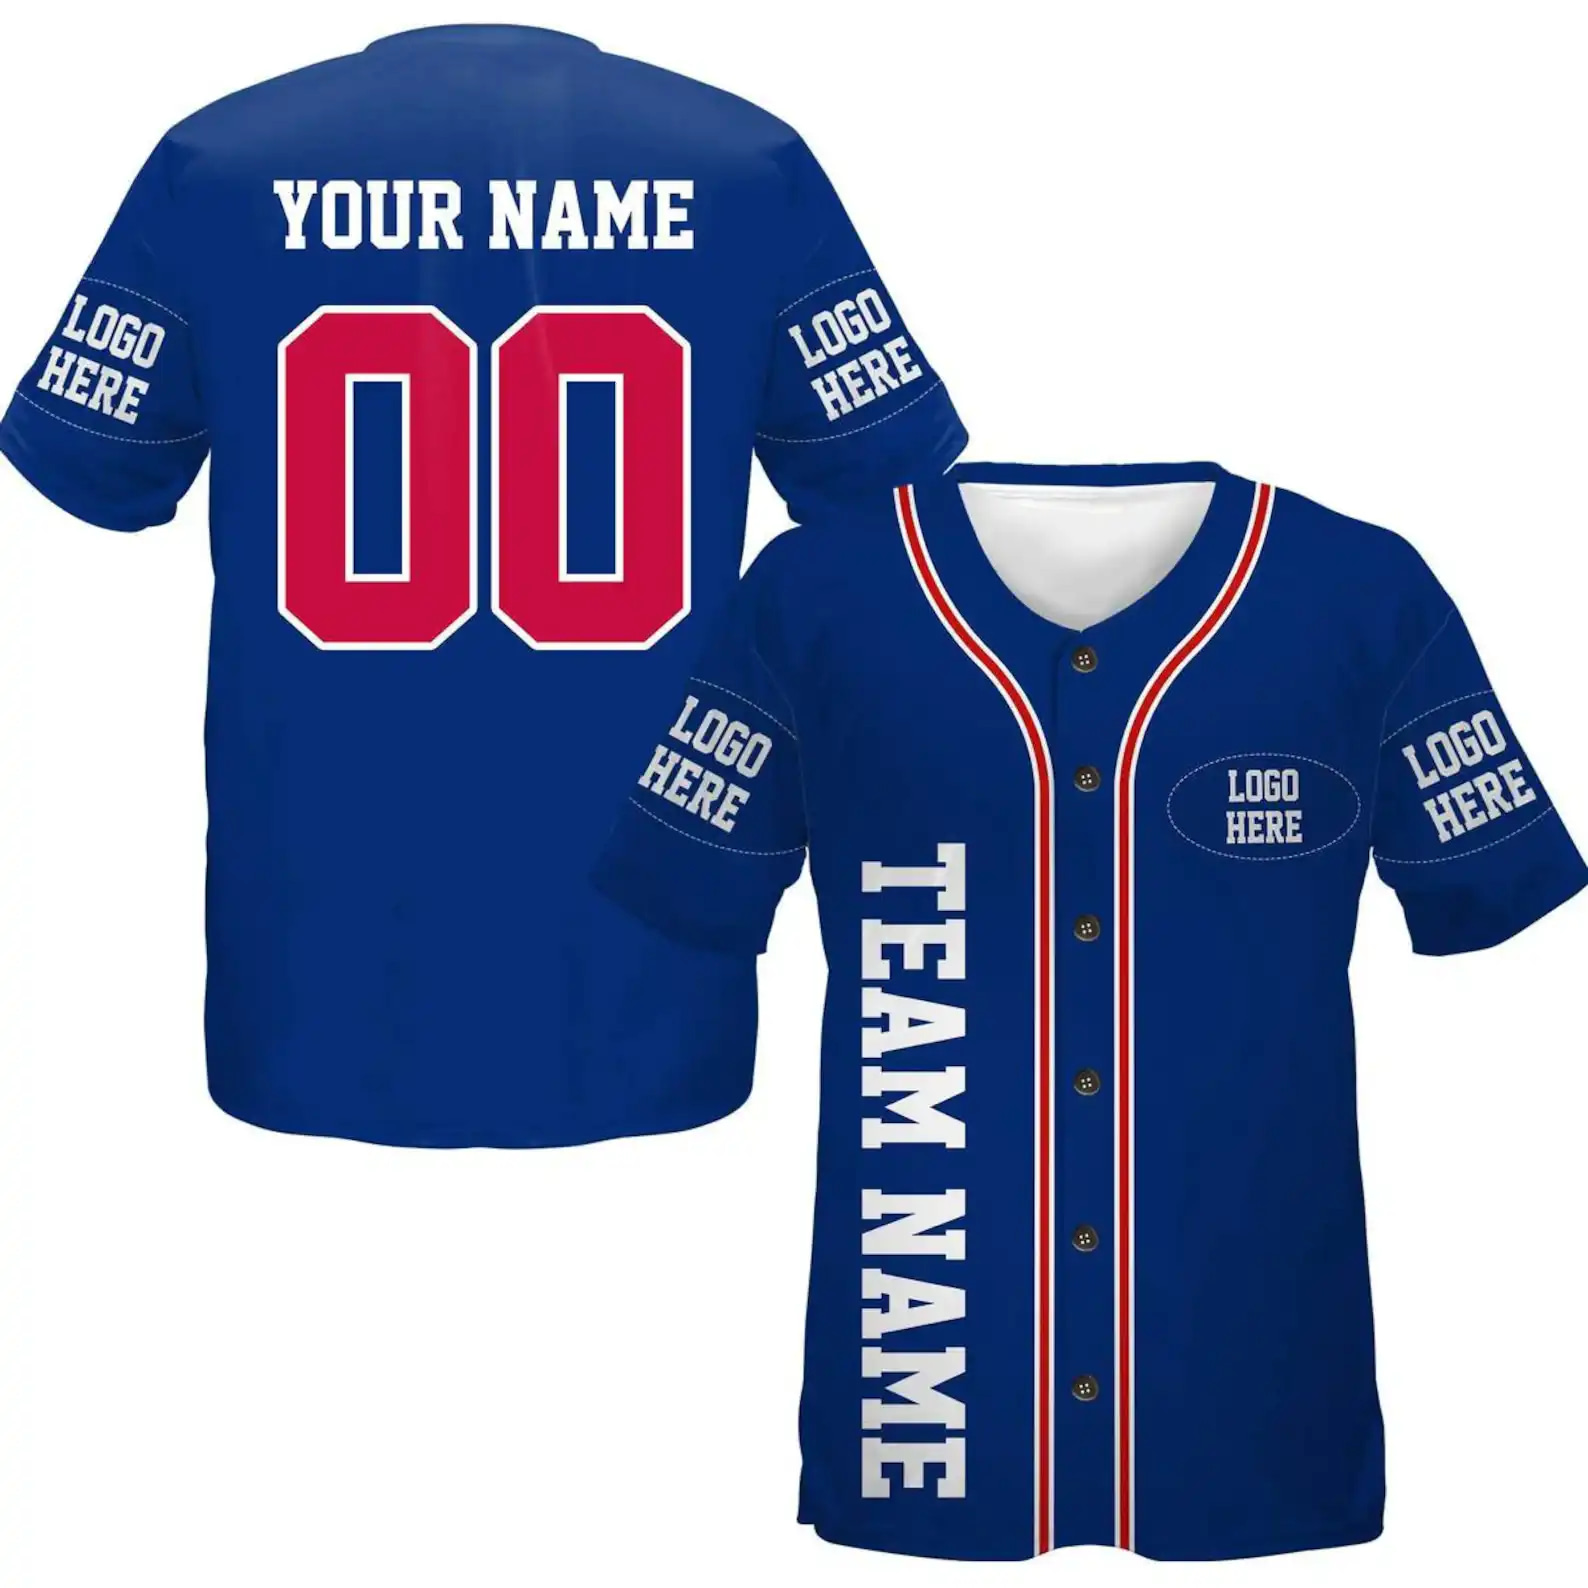 Personalized Buffalo Football Team Idea Gift For Fans Baseball Jersey